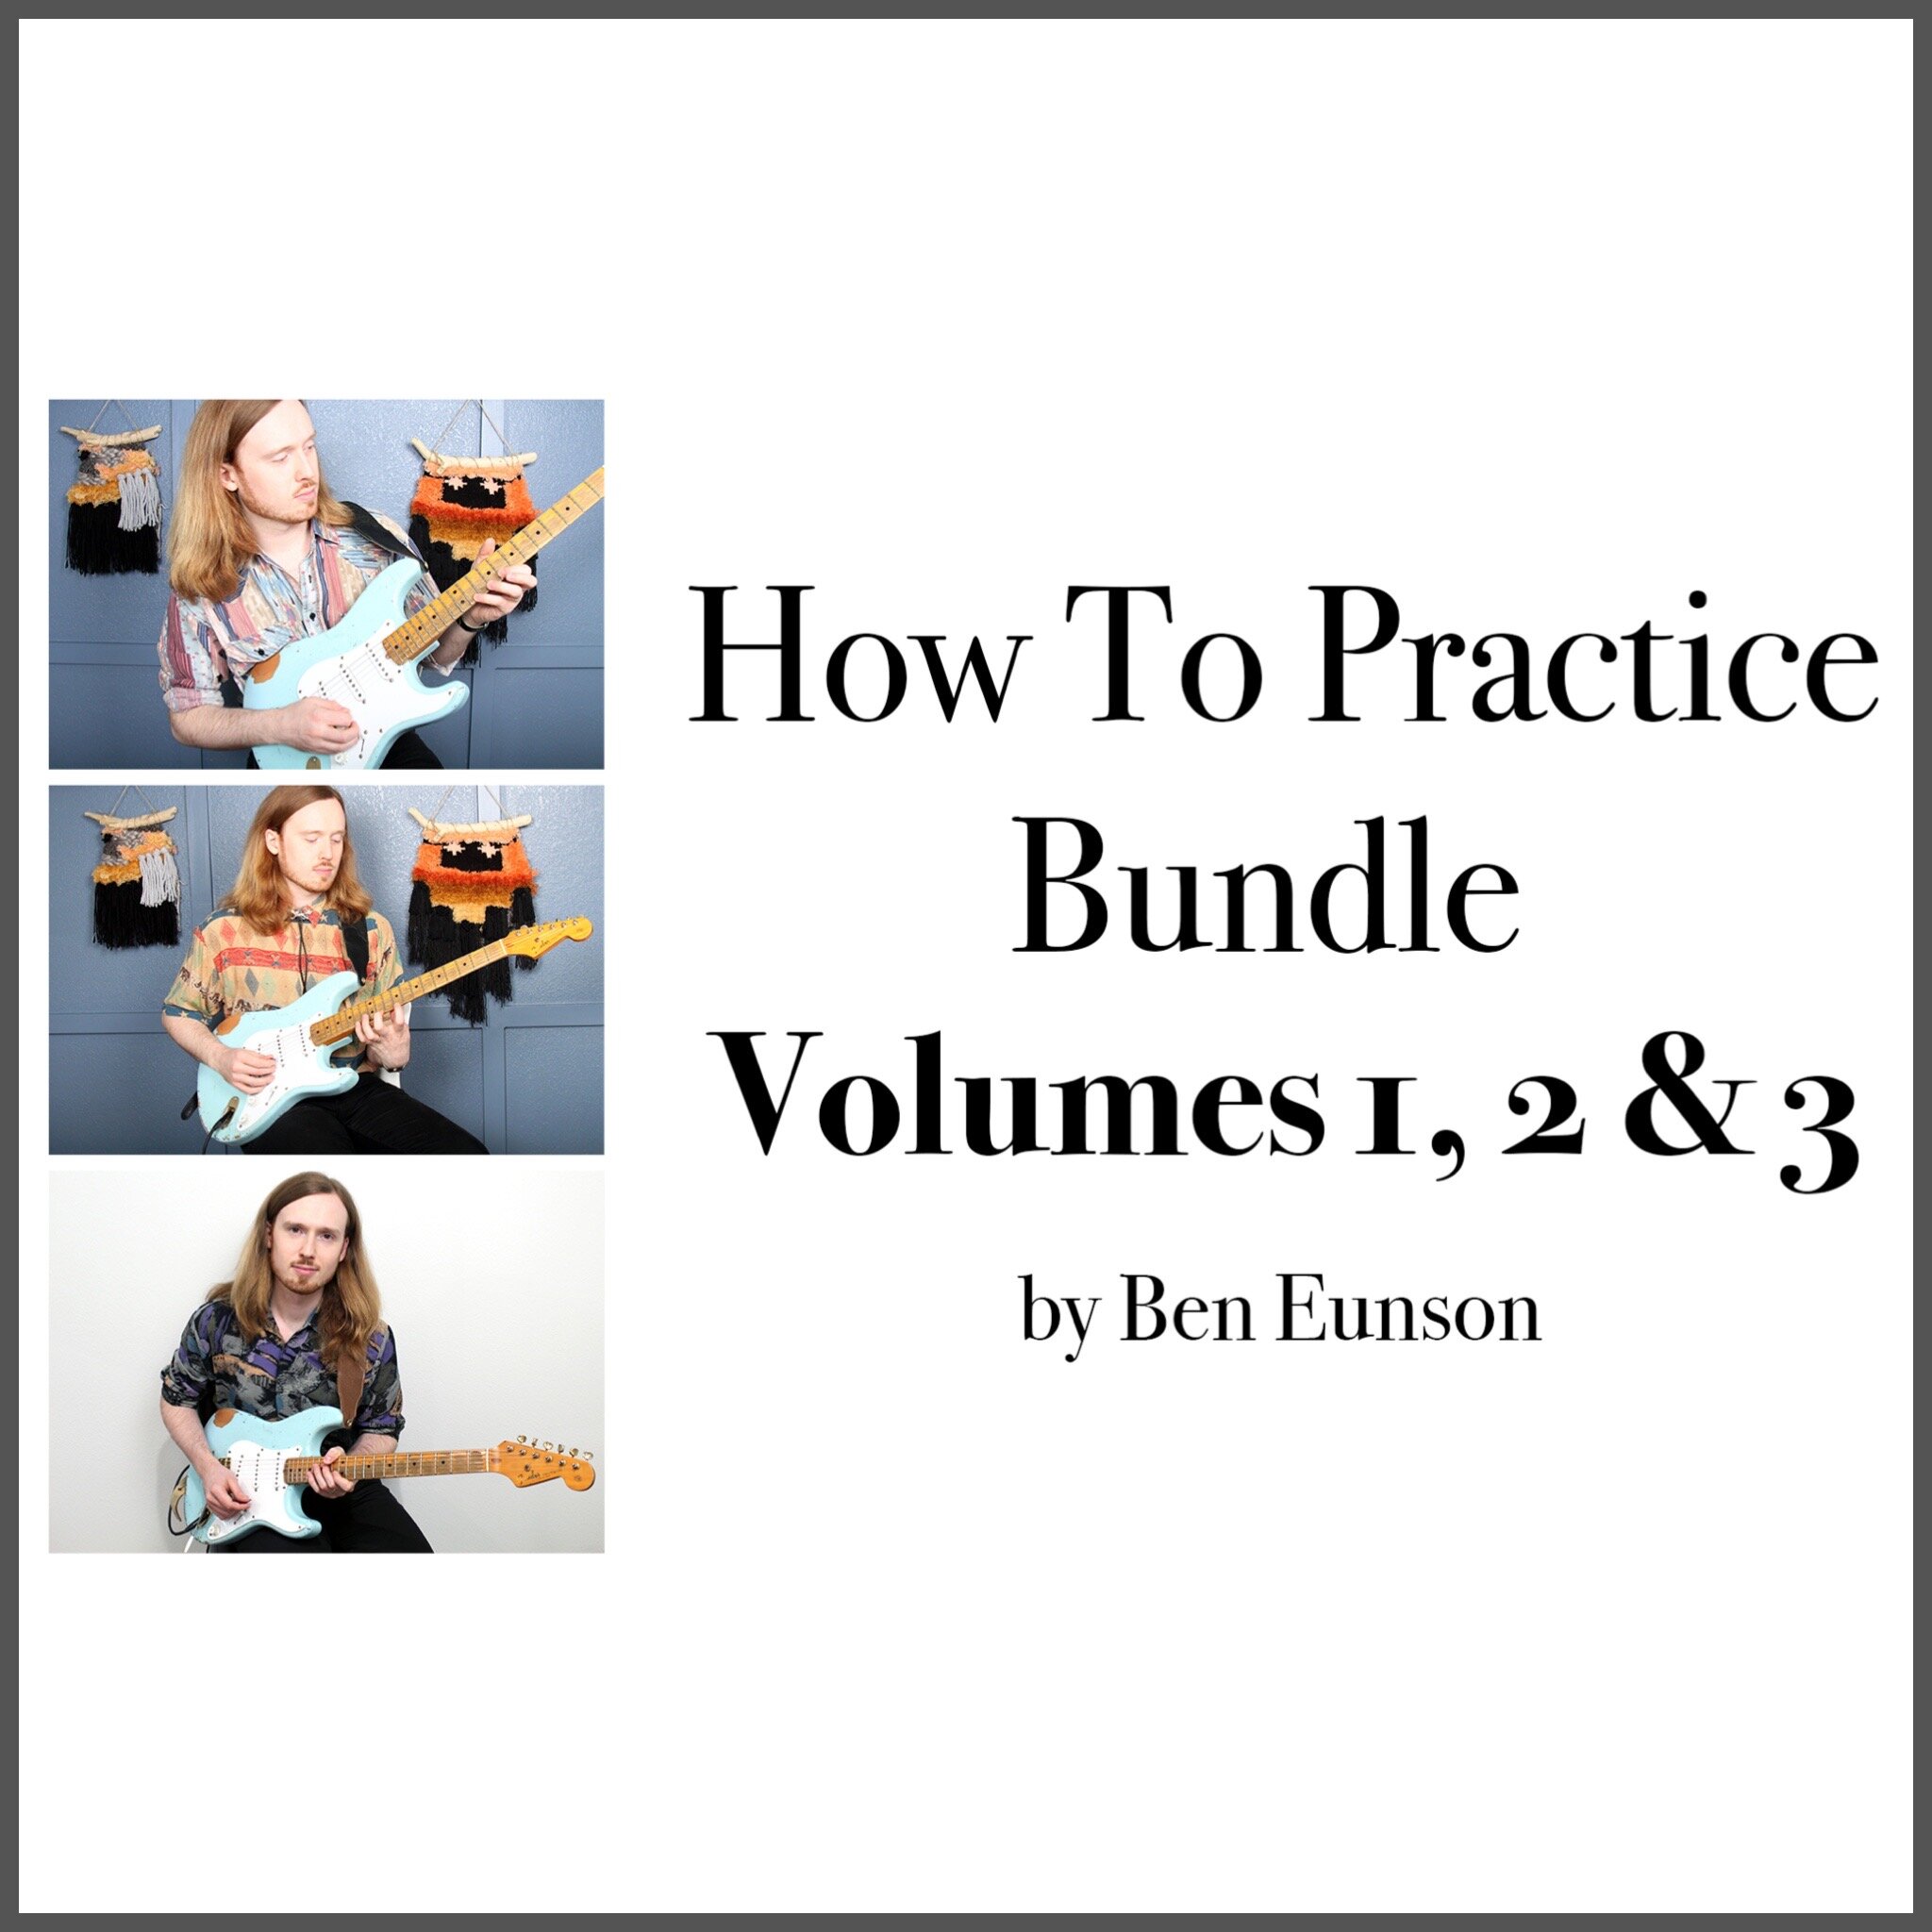 How to Practice Bundle - Ben Eunson